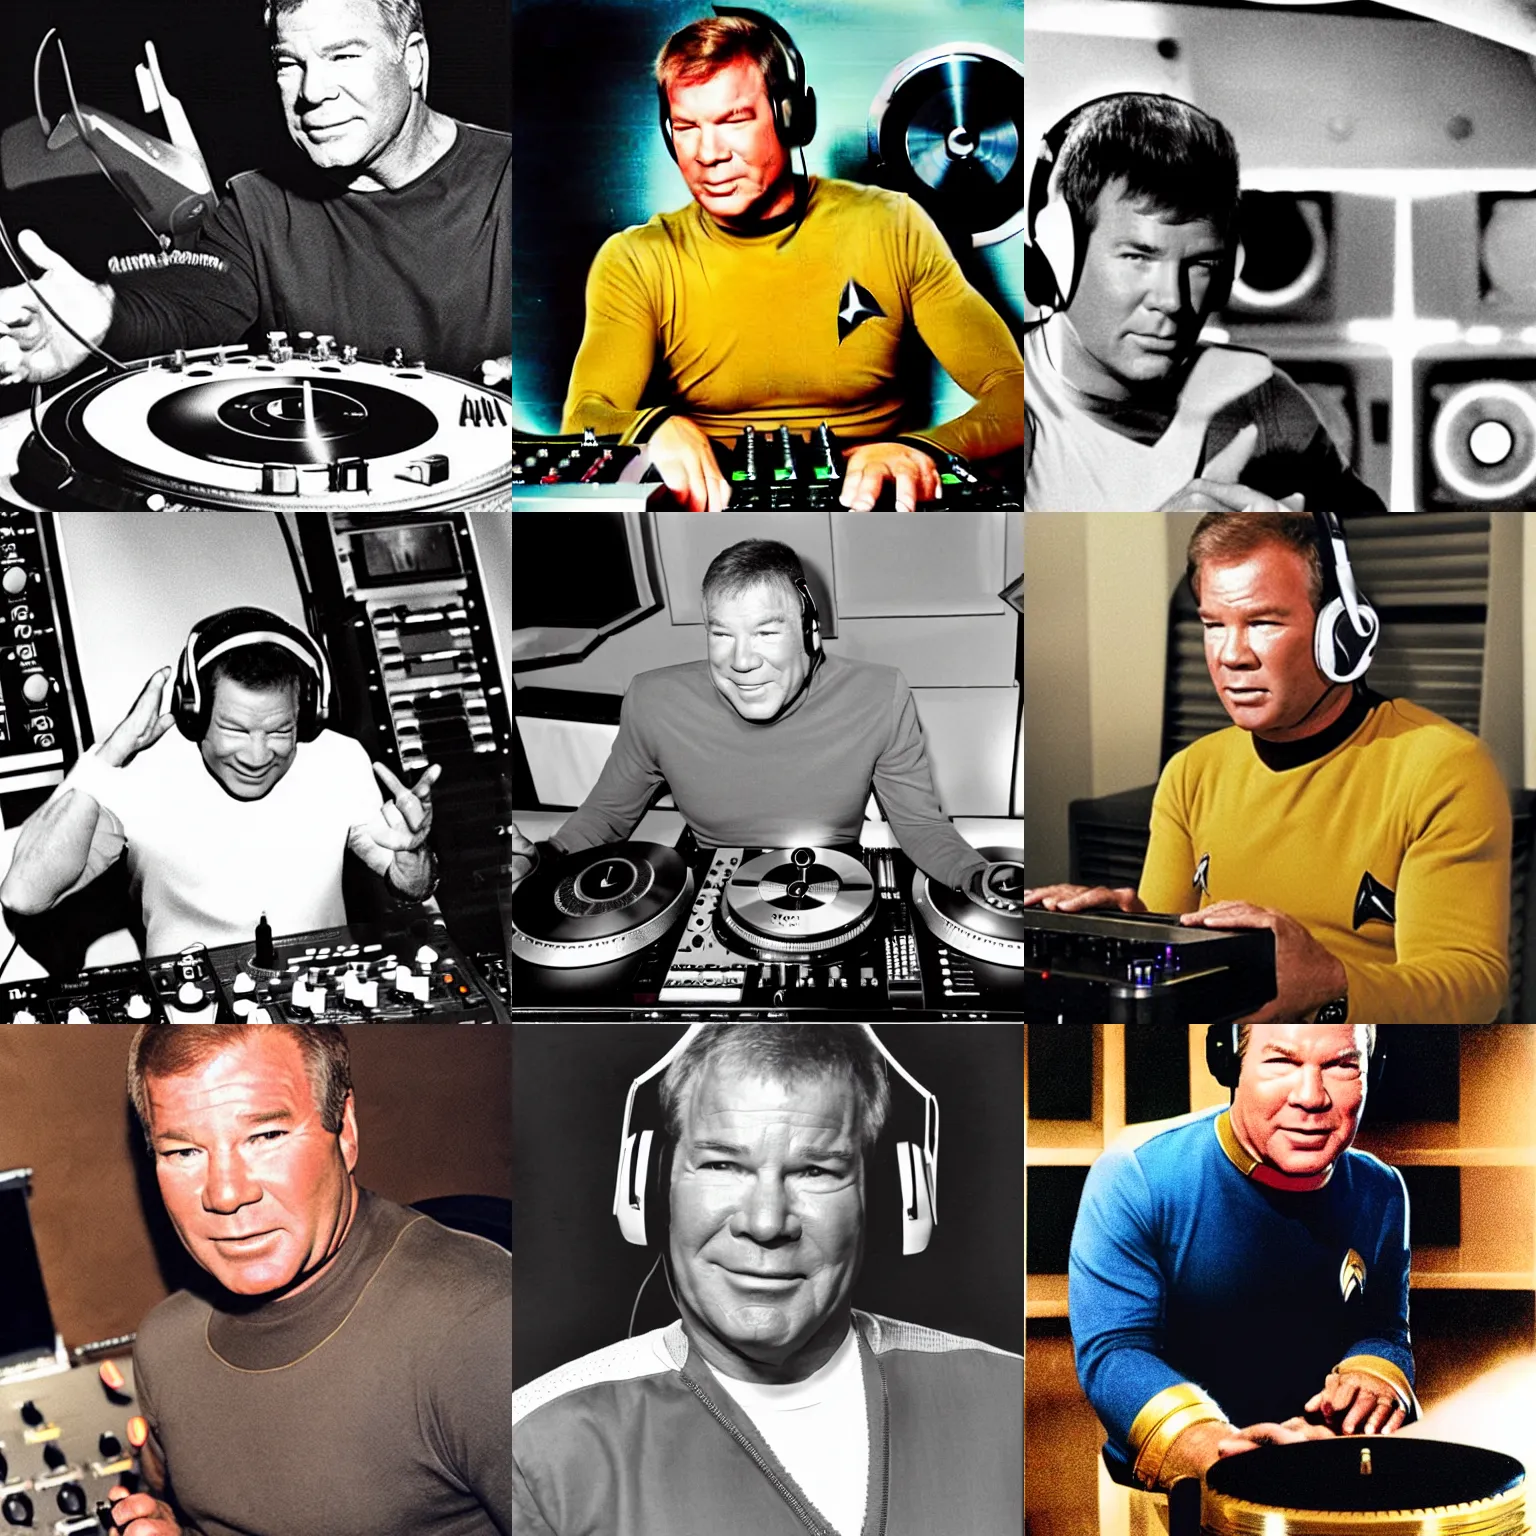 Prompt: captain kirk william shatner wearing headphones DJing with DJ turntables, photoreal